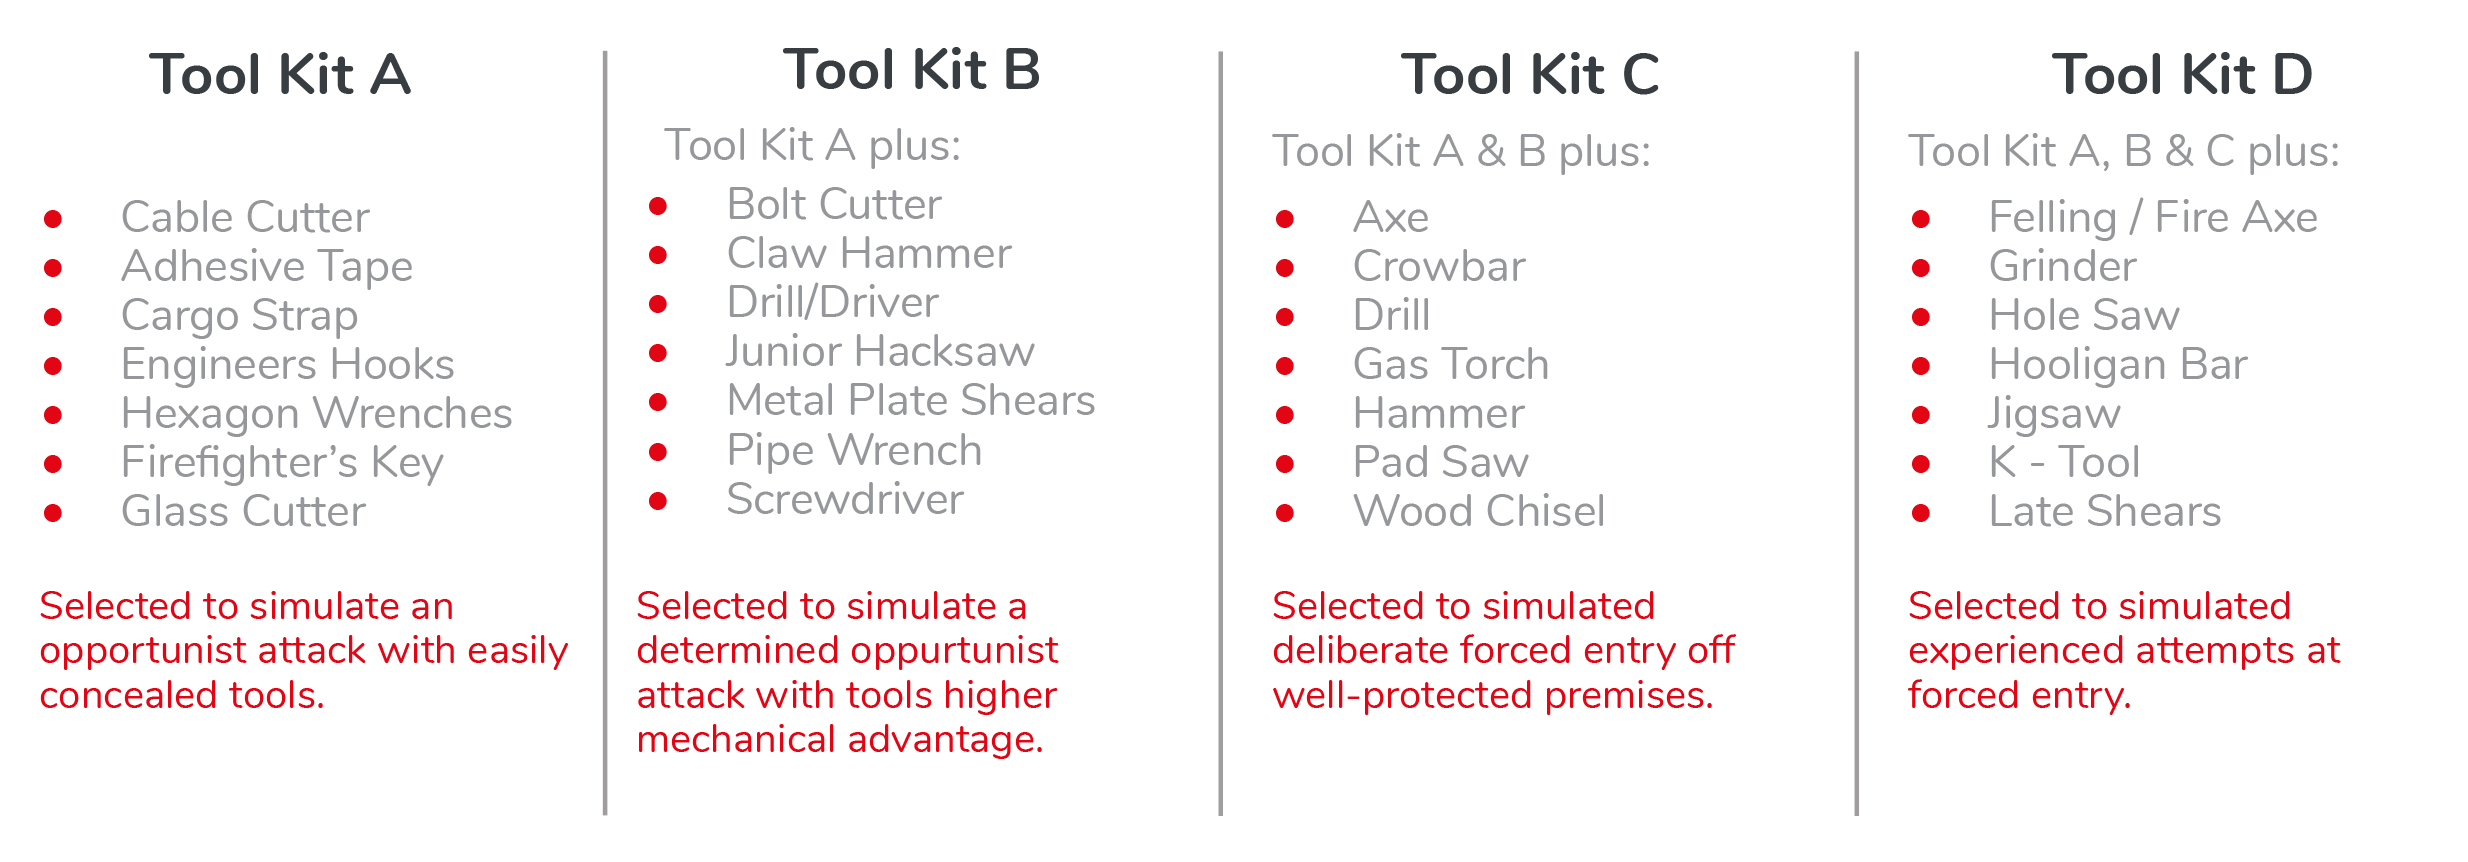 LPS1175 Tool Kits